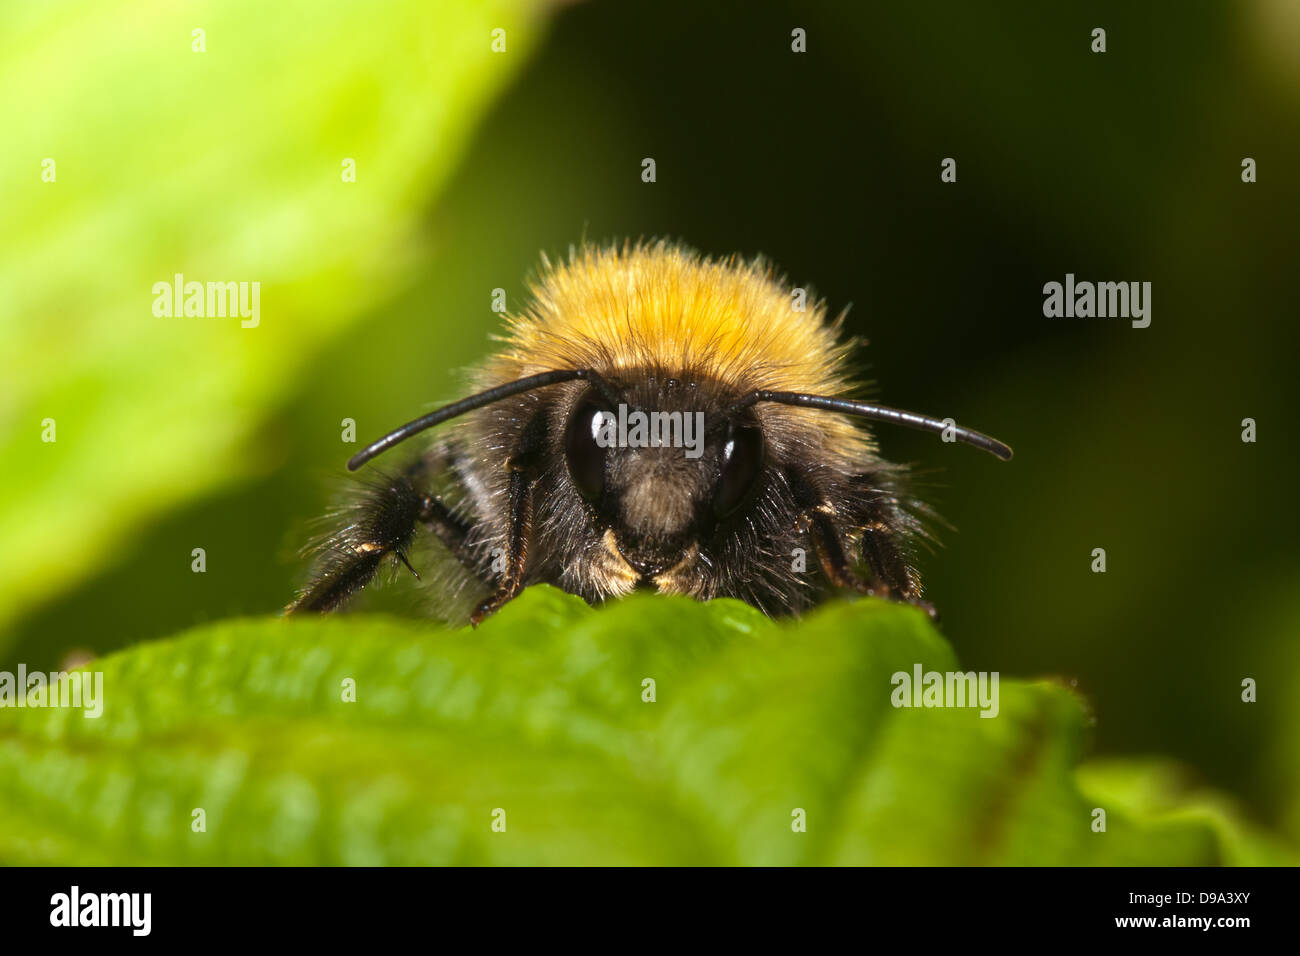 En la vista frontal del abejorro común (Bombus terrestris) sentada sobre una hoja. Foto de stock